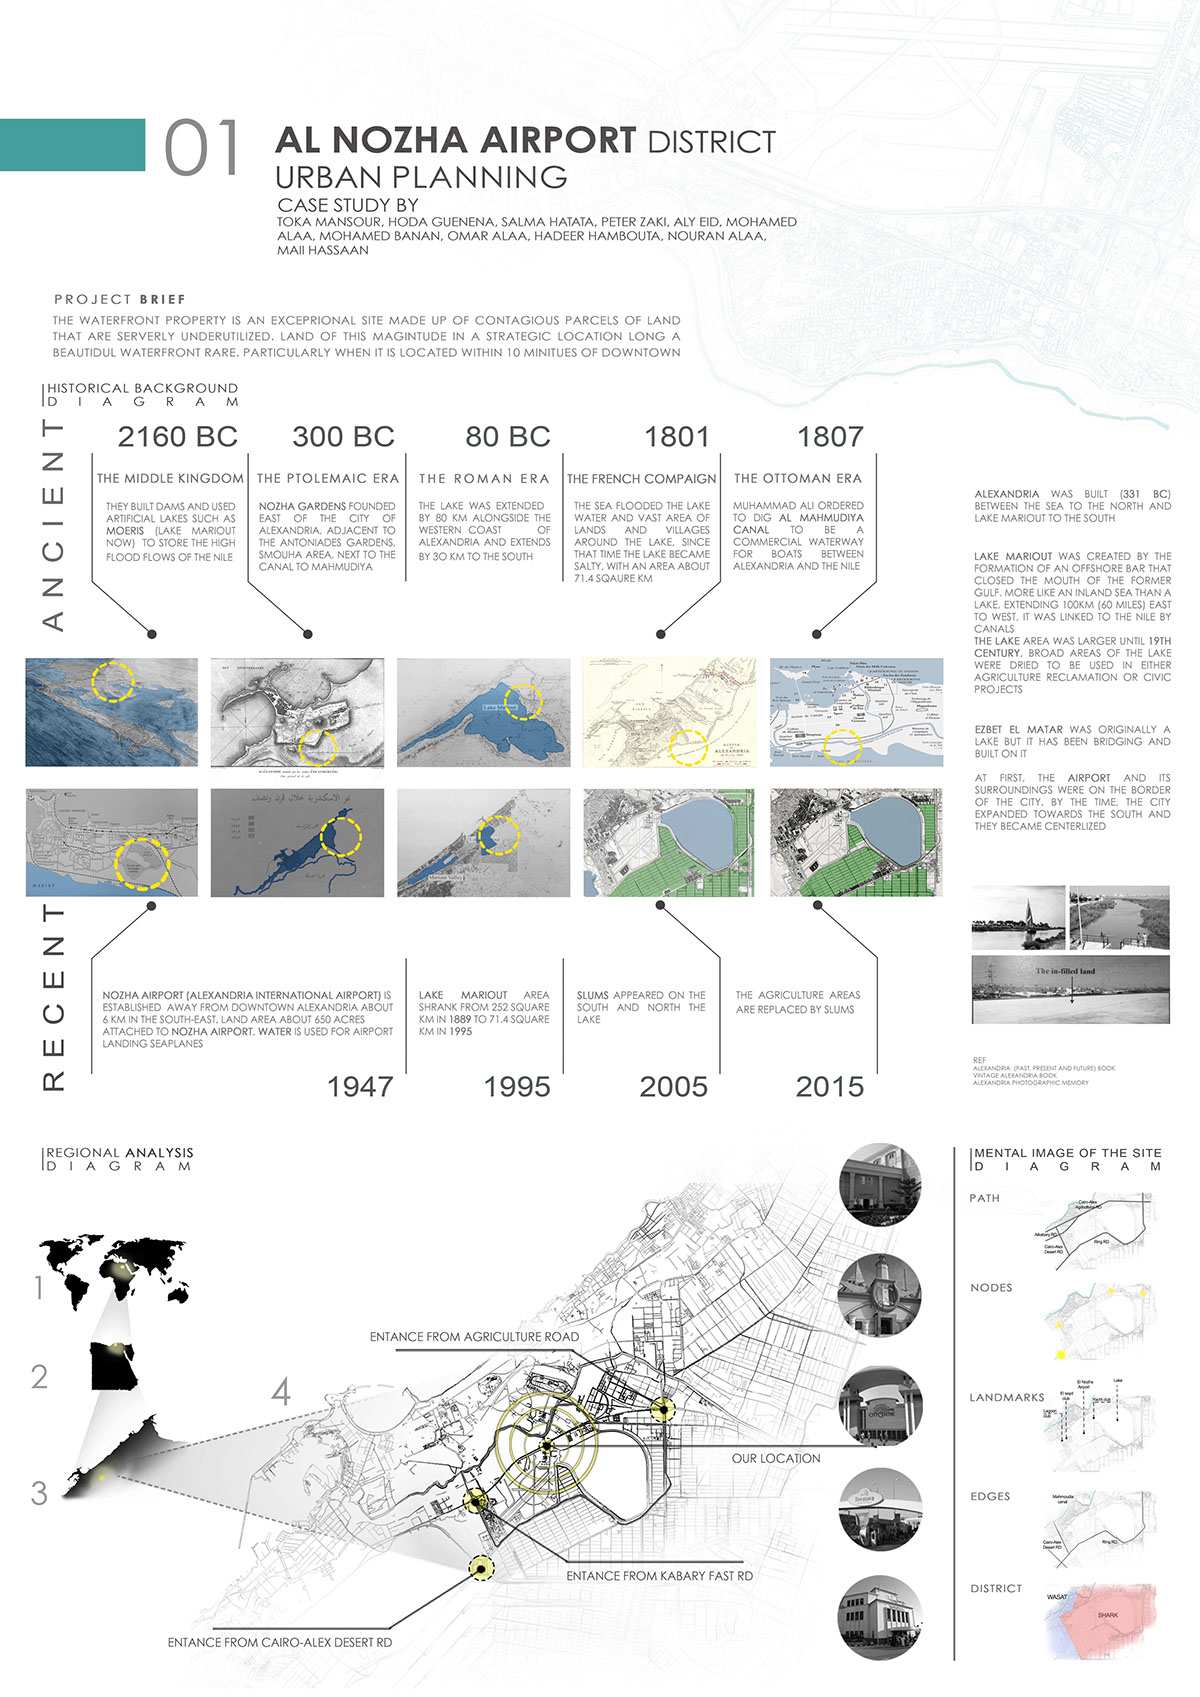 design AL-Nozha Airport District Science park Eco-Research Village Site Analysis Proposal Case Study urban planning concept Spines